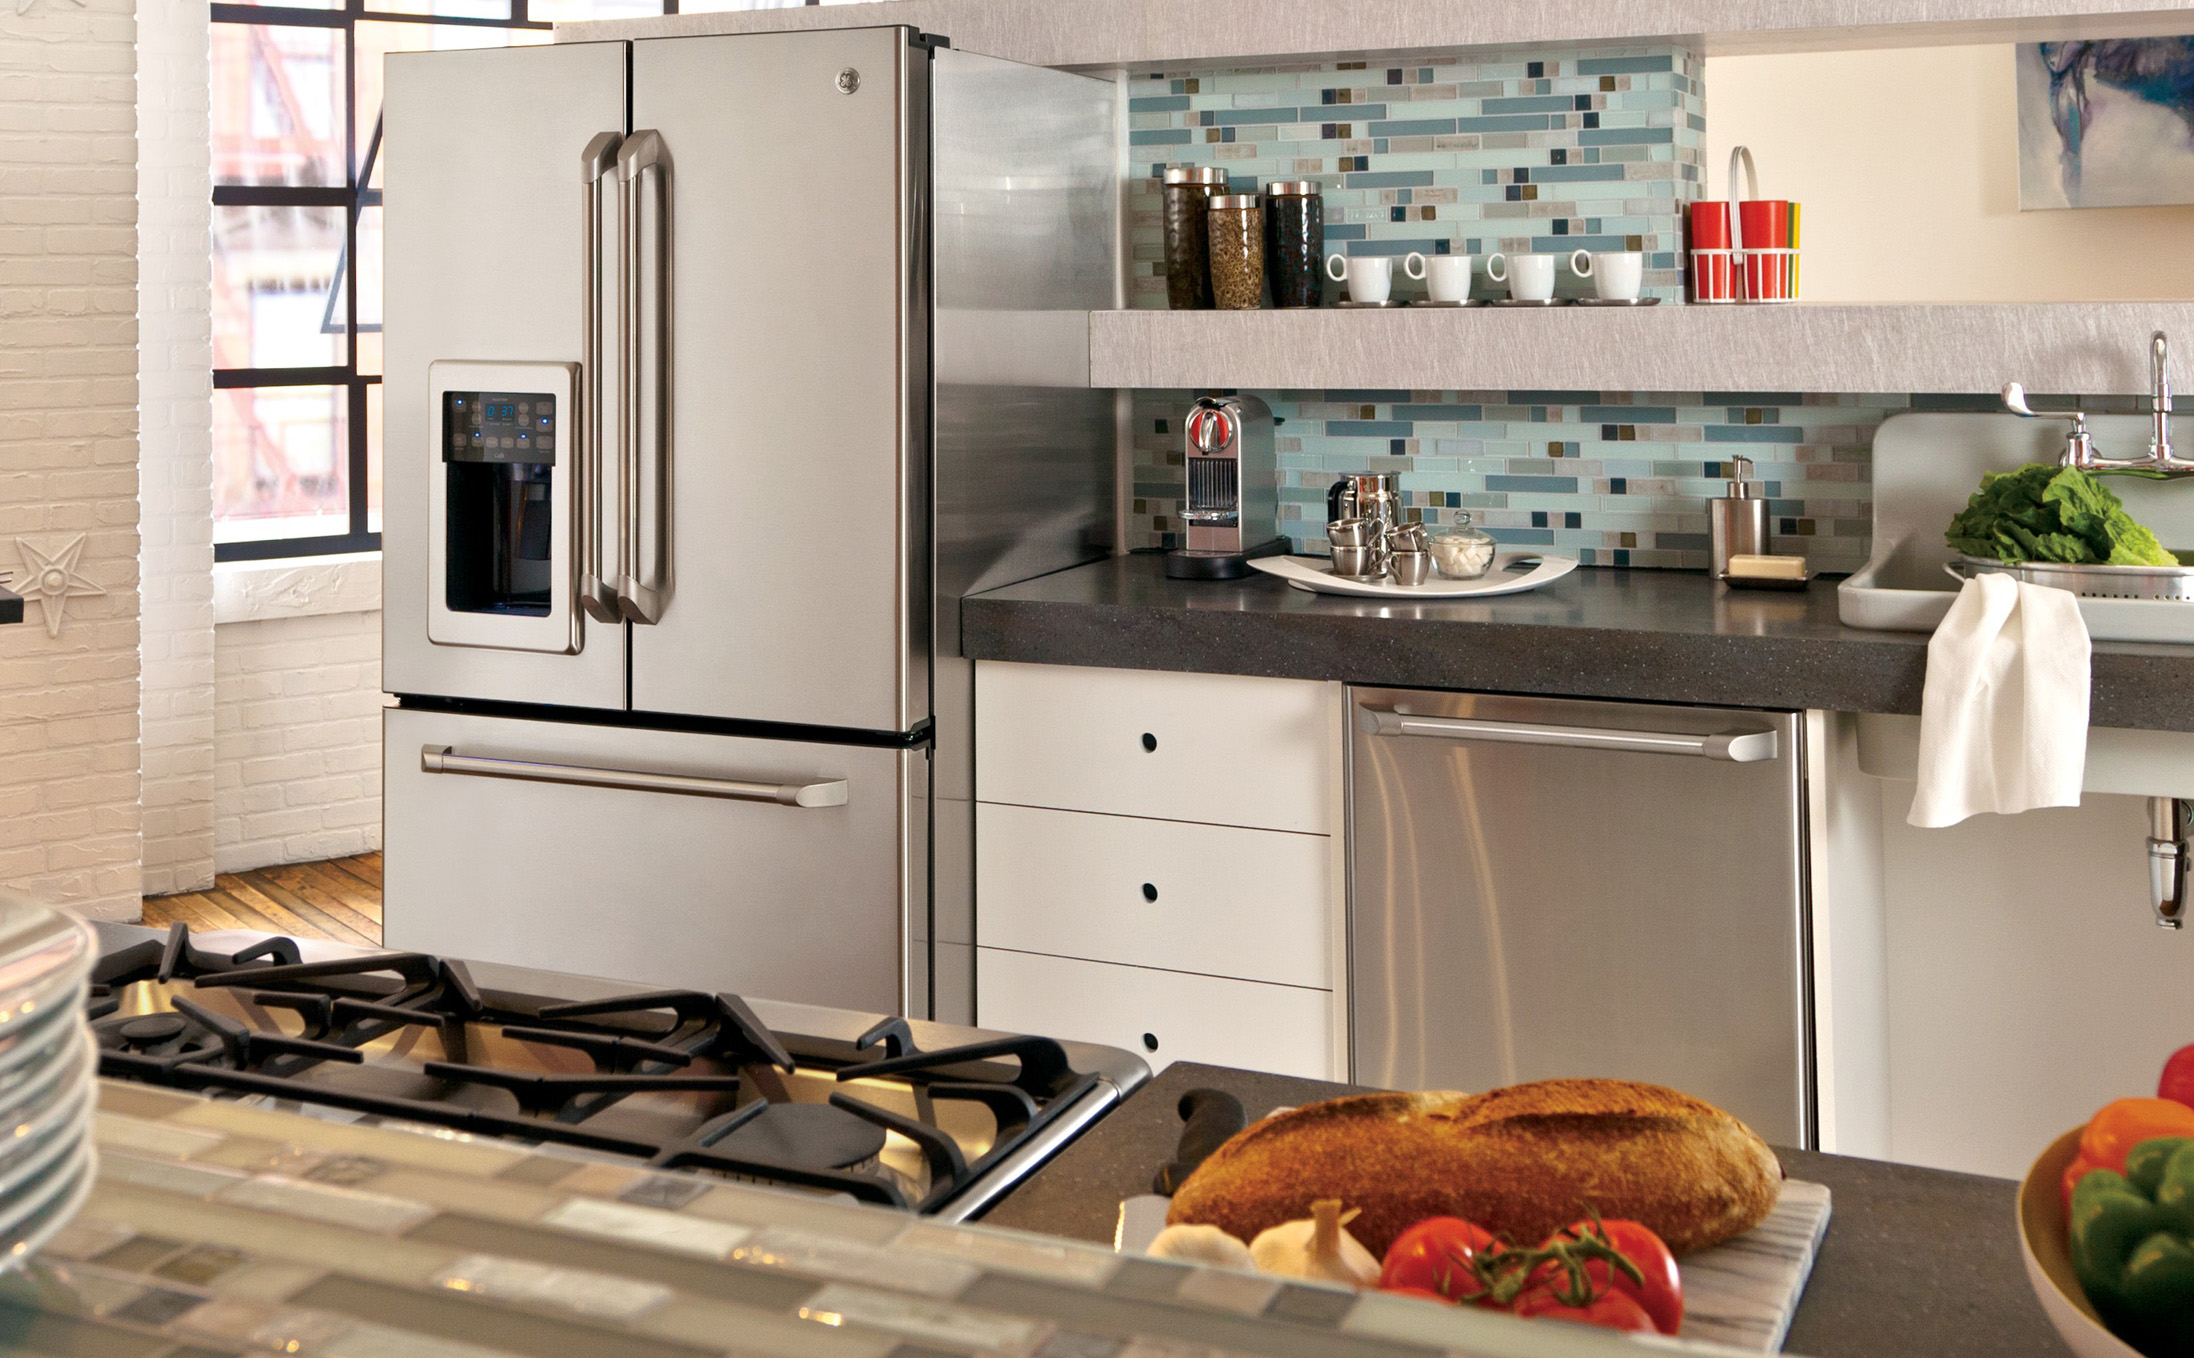 ge-cafe-kitchen-appliance-reviews-dcrwebdesign